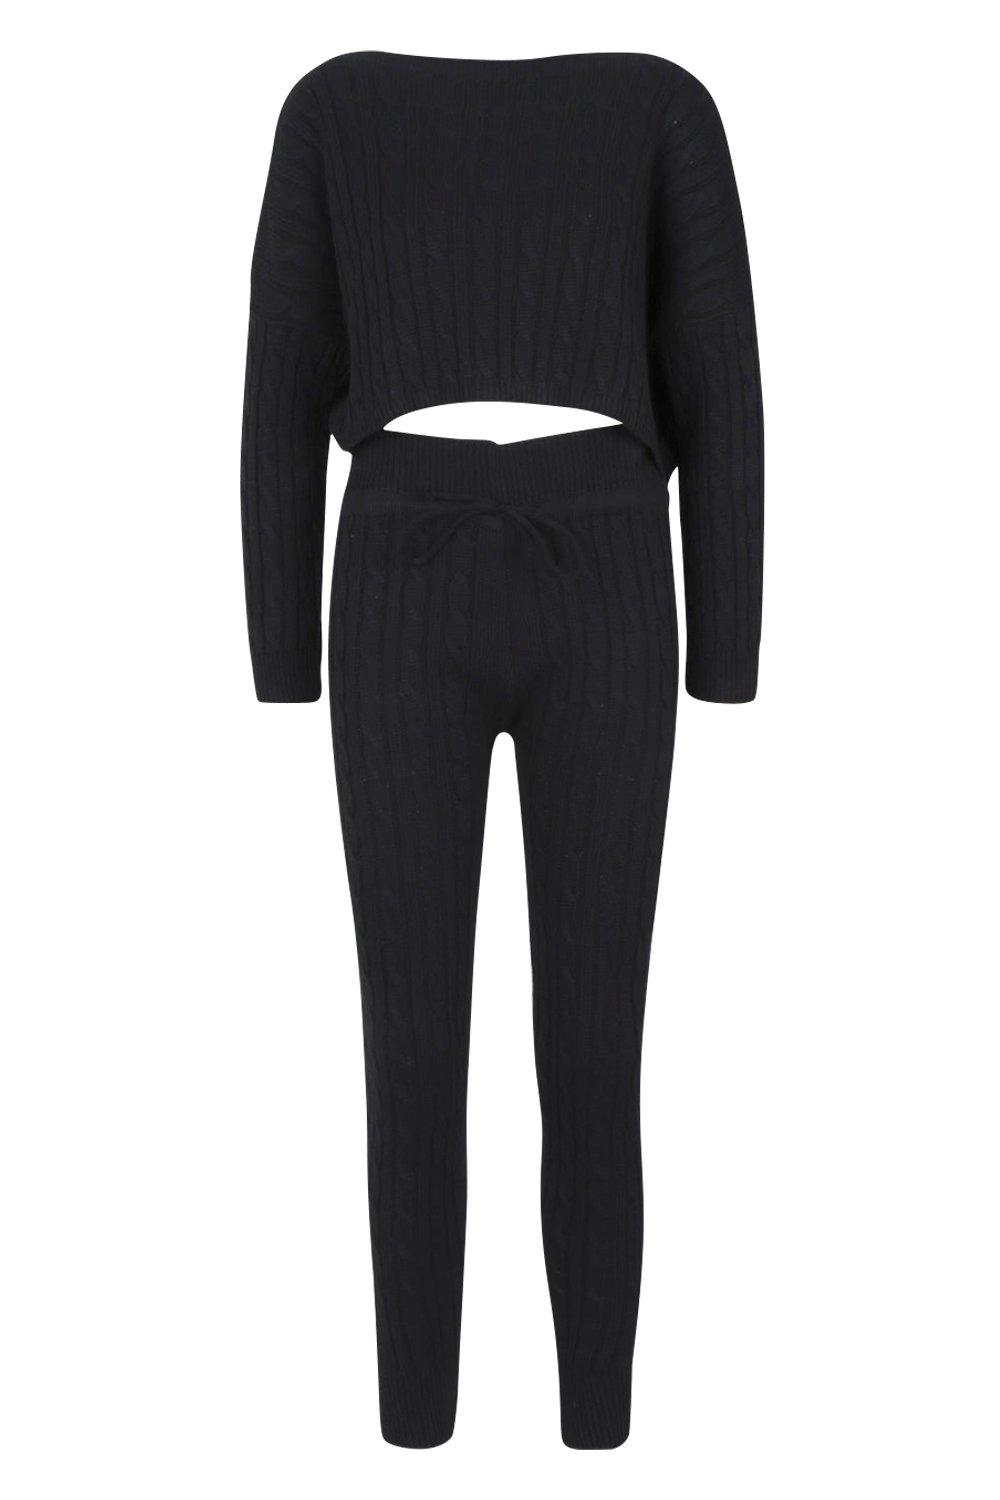 https://media.boohoo.com/i/boohoo/fzz99099_black_xl_2/female-black-cable-knit-oversized-sweater-&-legging-two-piece